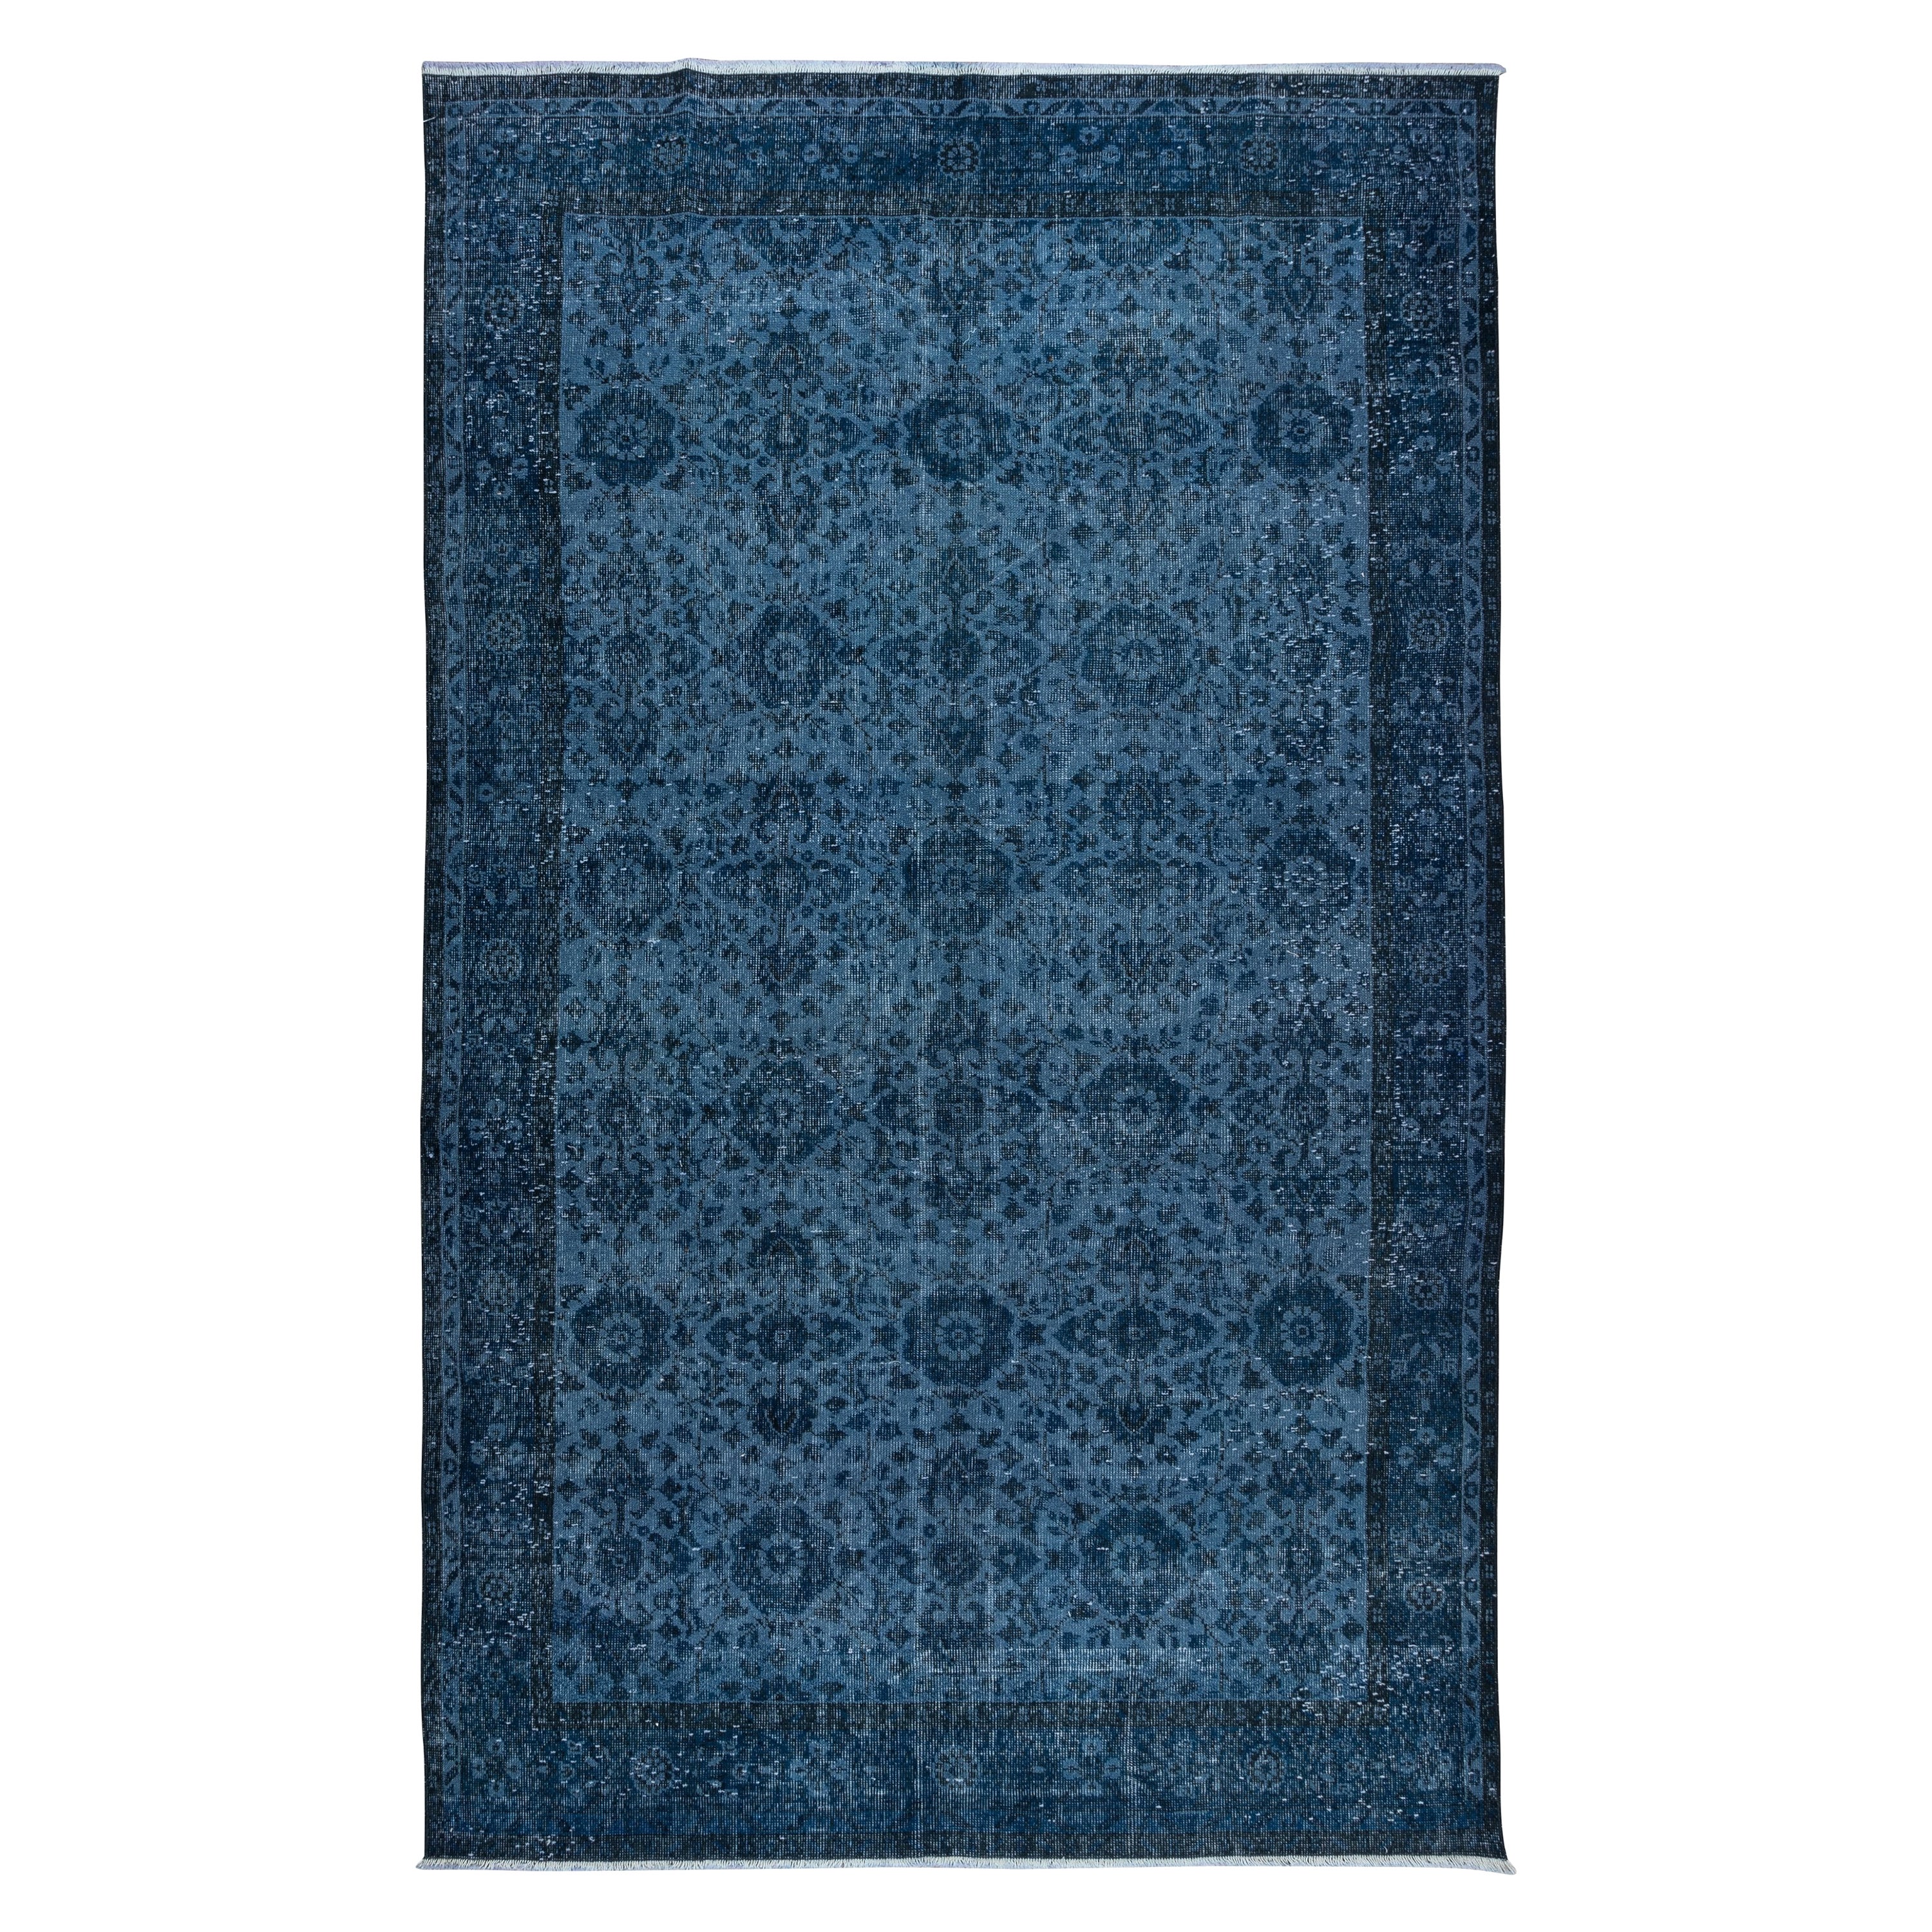 6.4x10.6 Ft Hand Knotted Floral Rug, Blue Modern Turkish Carpet for Living Room